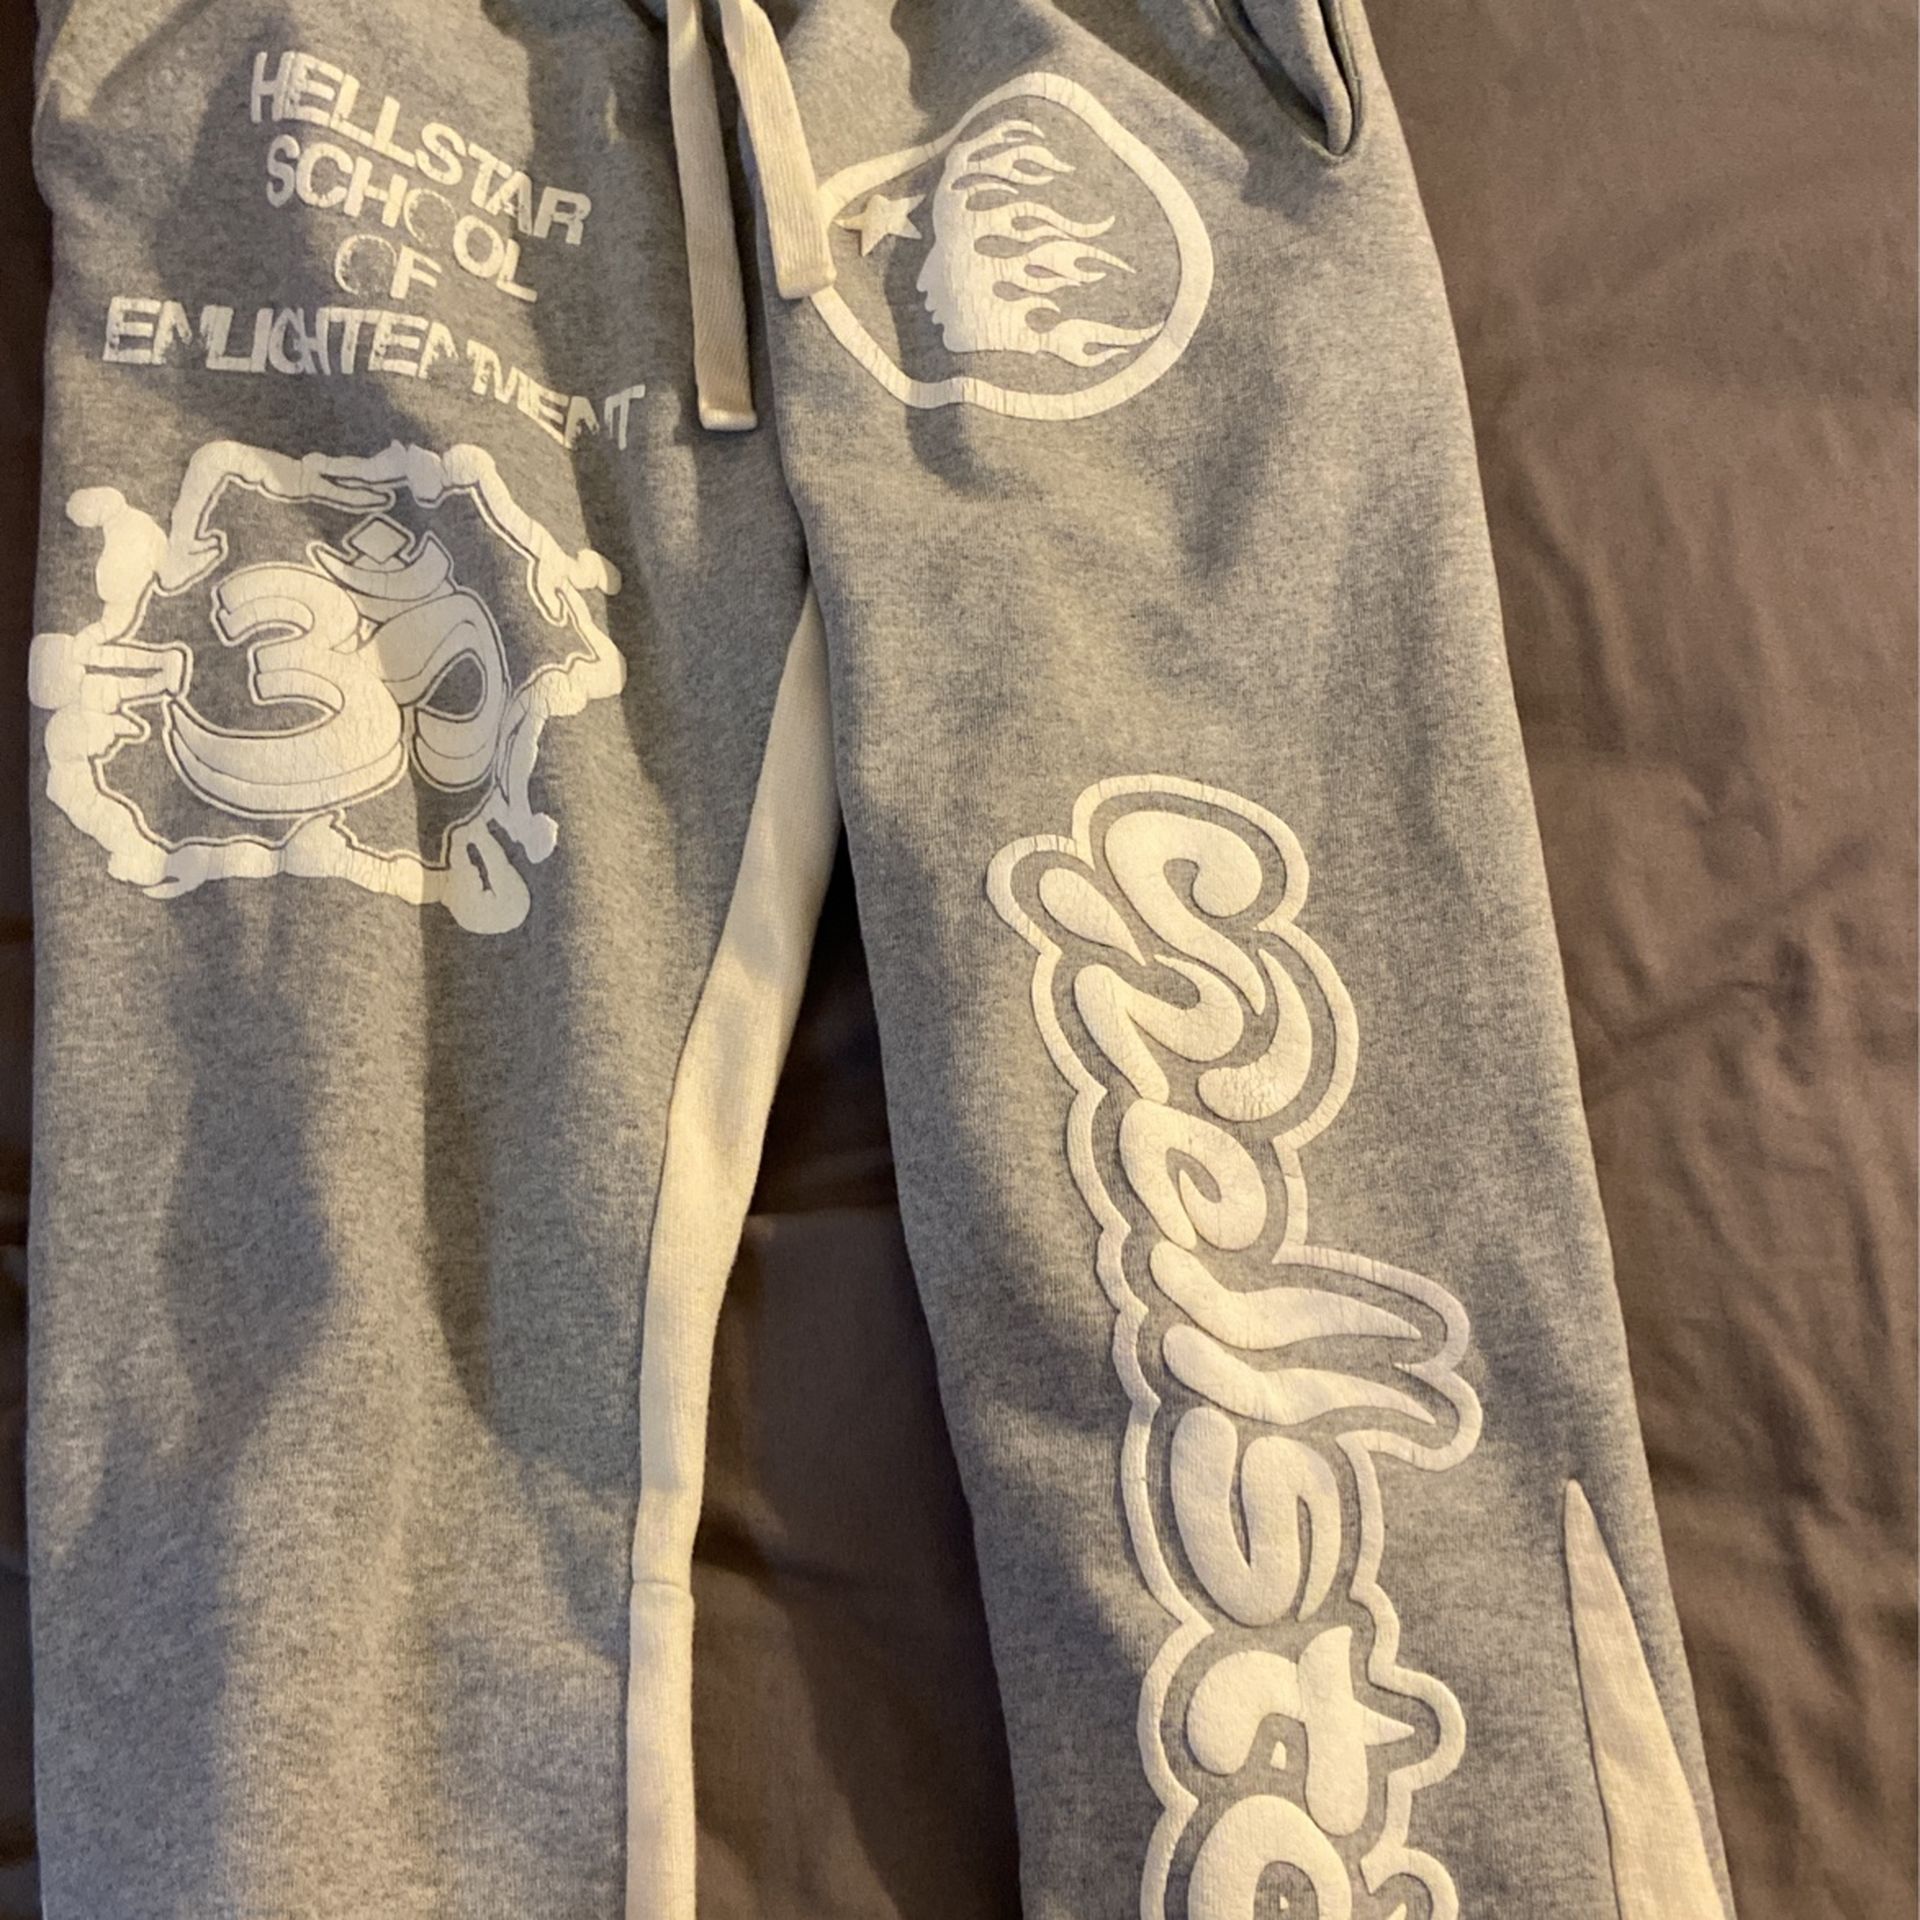 HellStar Grey Sweats (Size M)